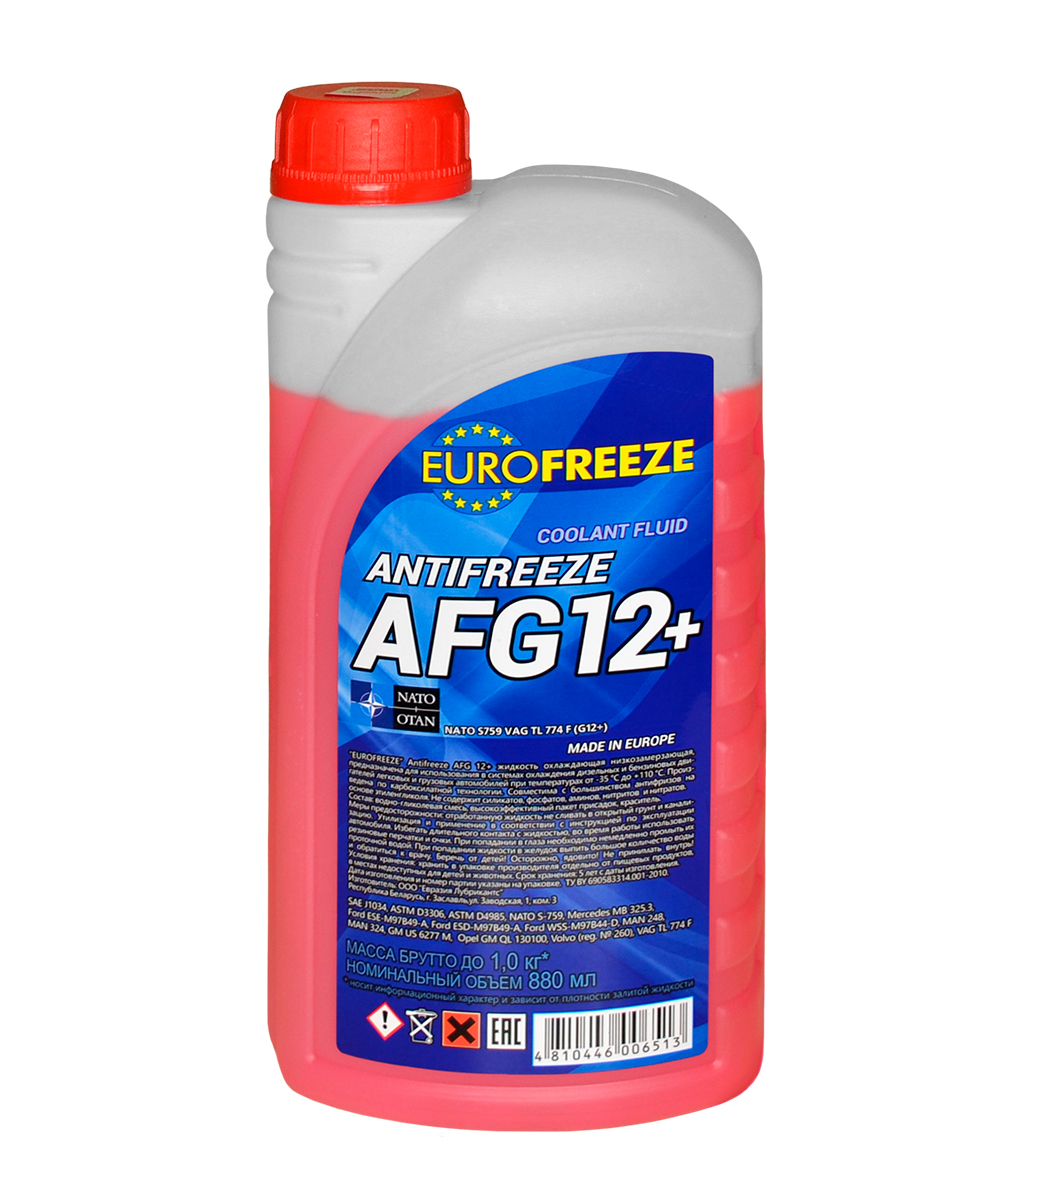 Eurofreeze Antifreeze AFG 12+